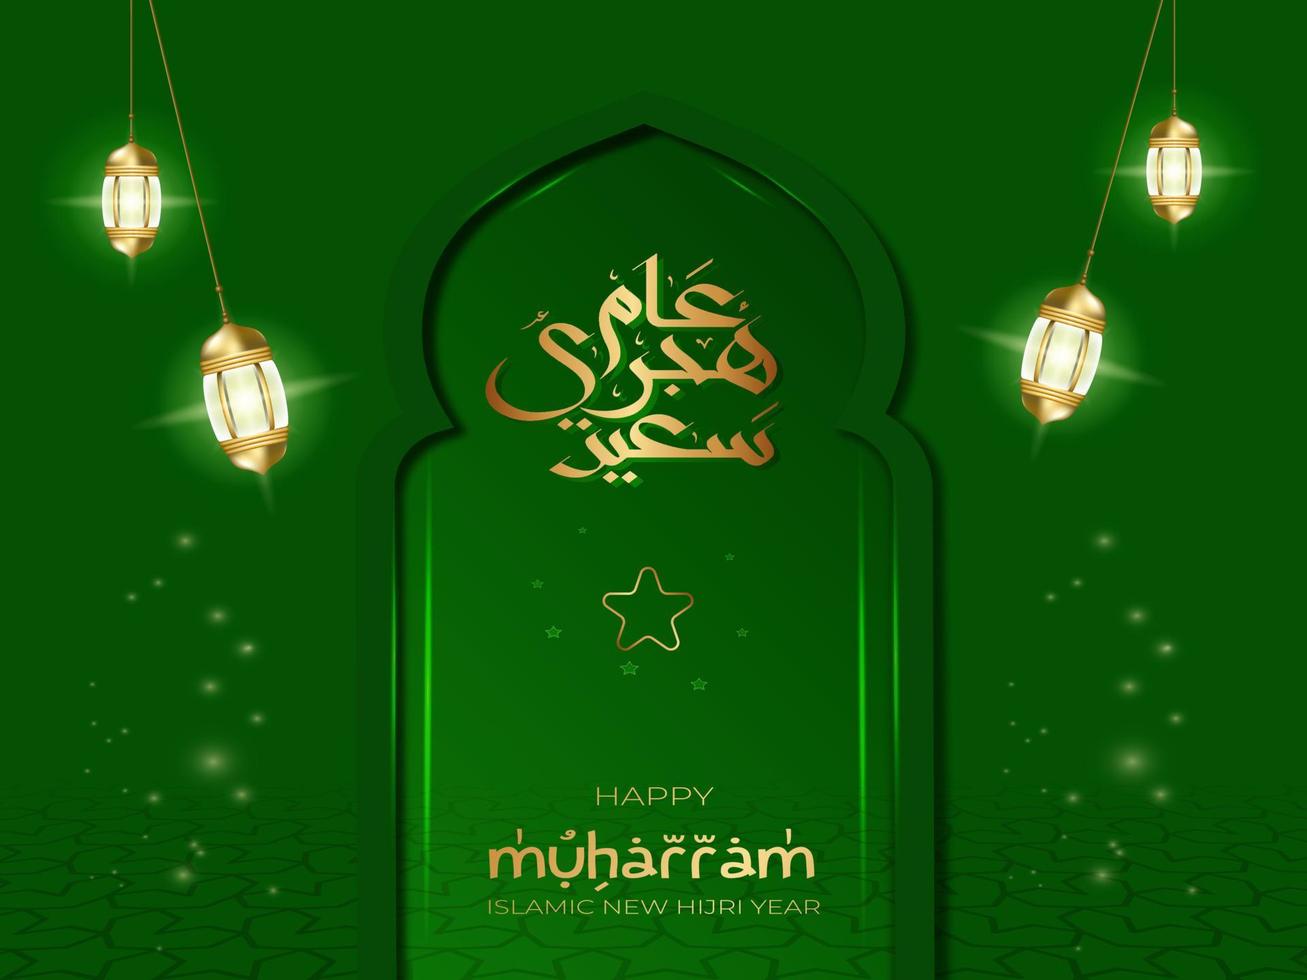 Happy Islamic New Hijri Year Muharram 1st background design vector